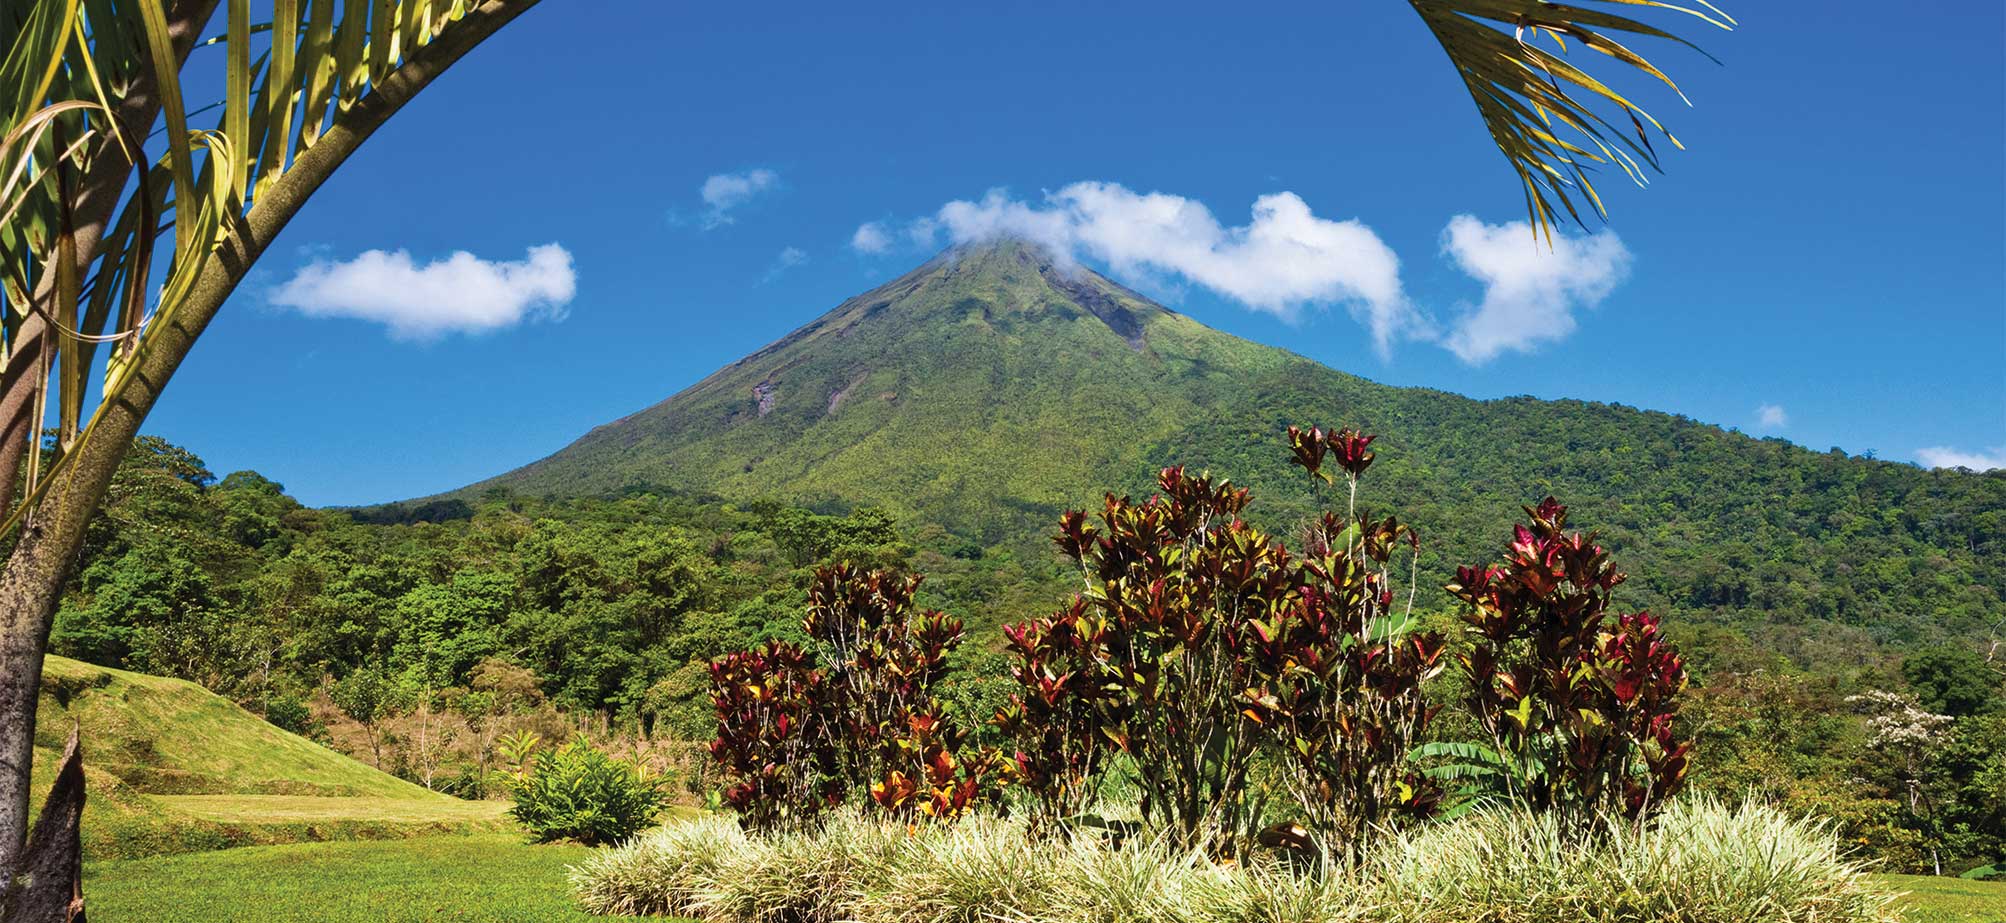 Central America's Garden of Eden | Costa Rica | Jules Verne